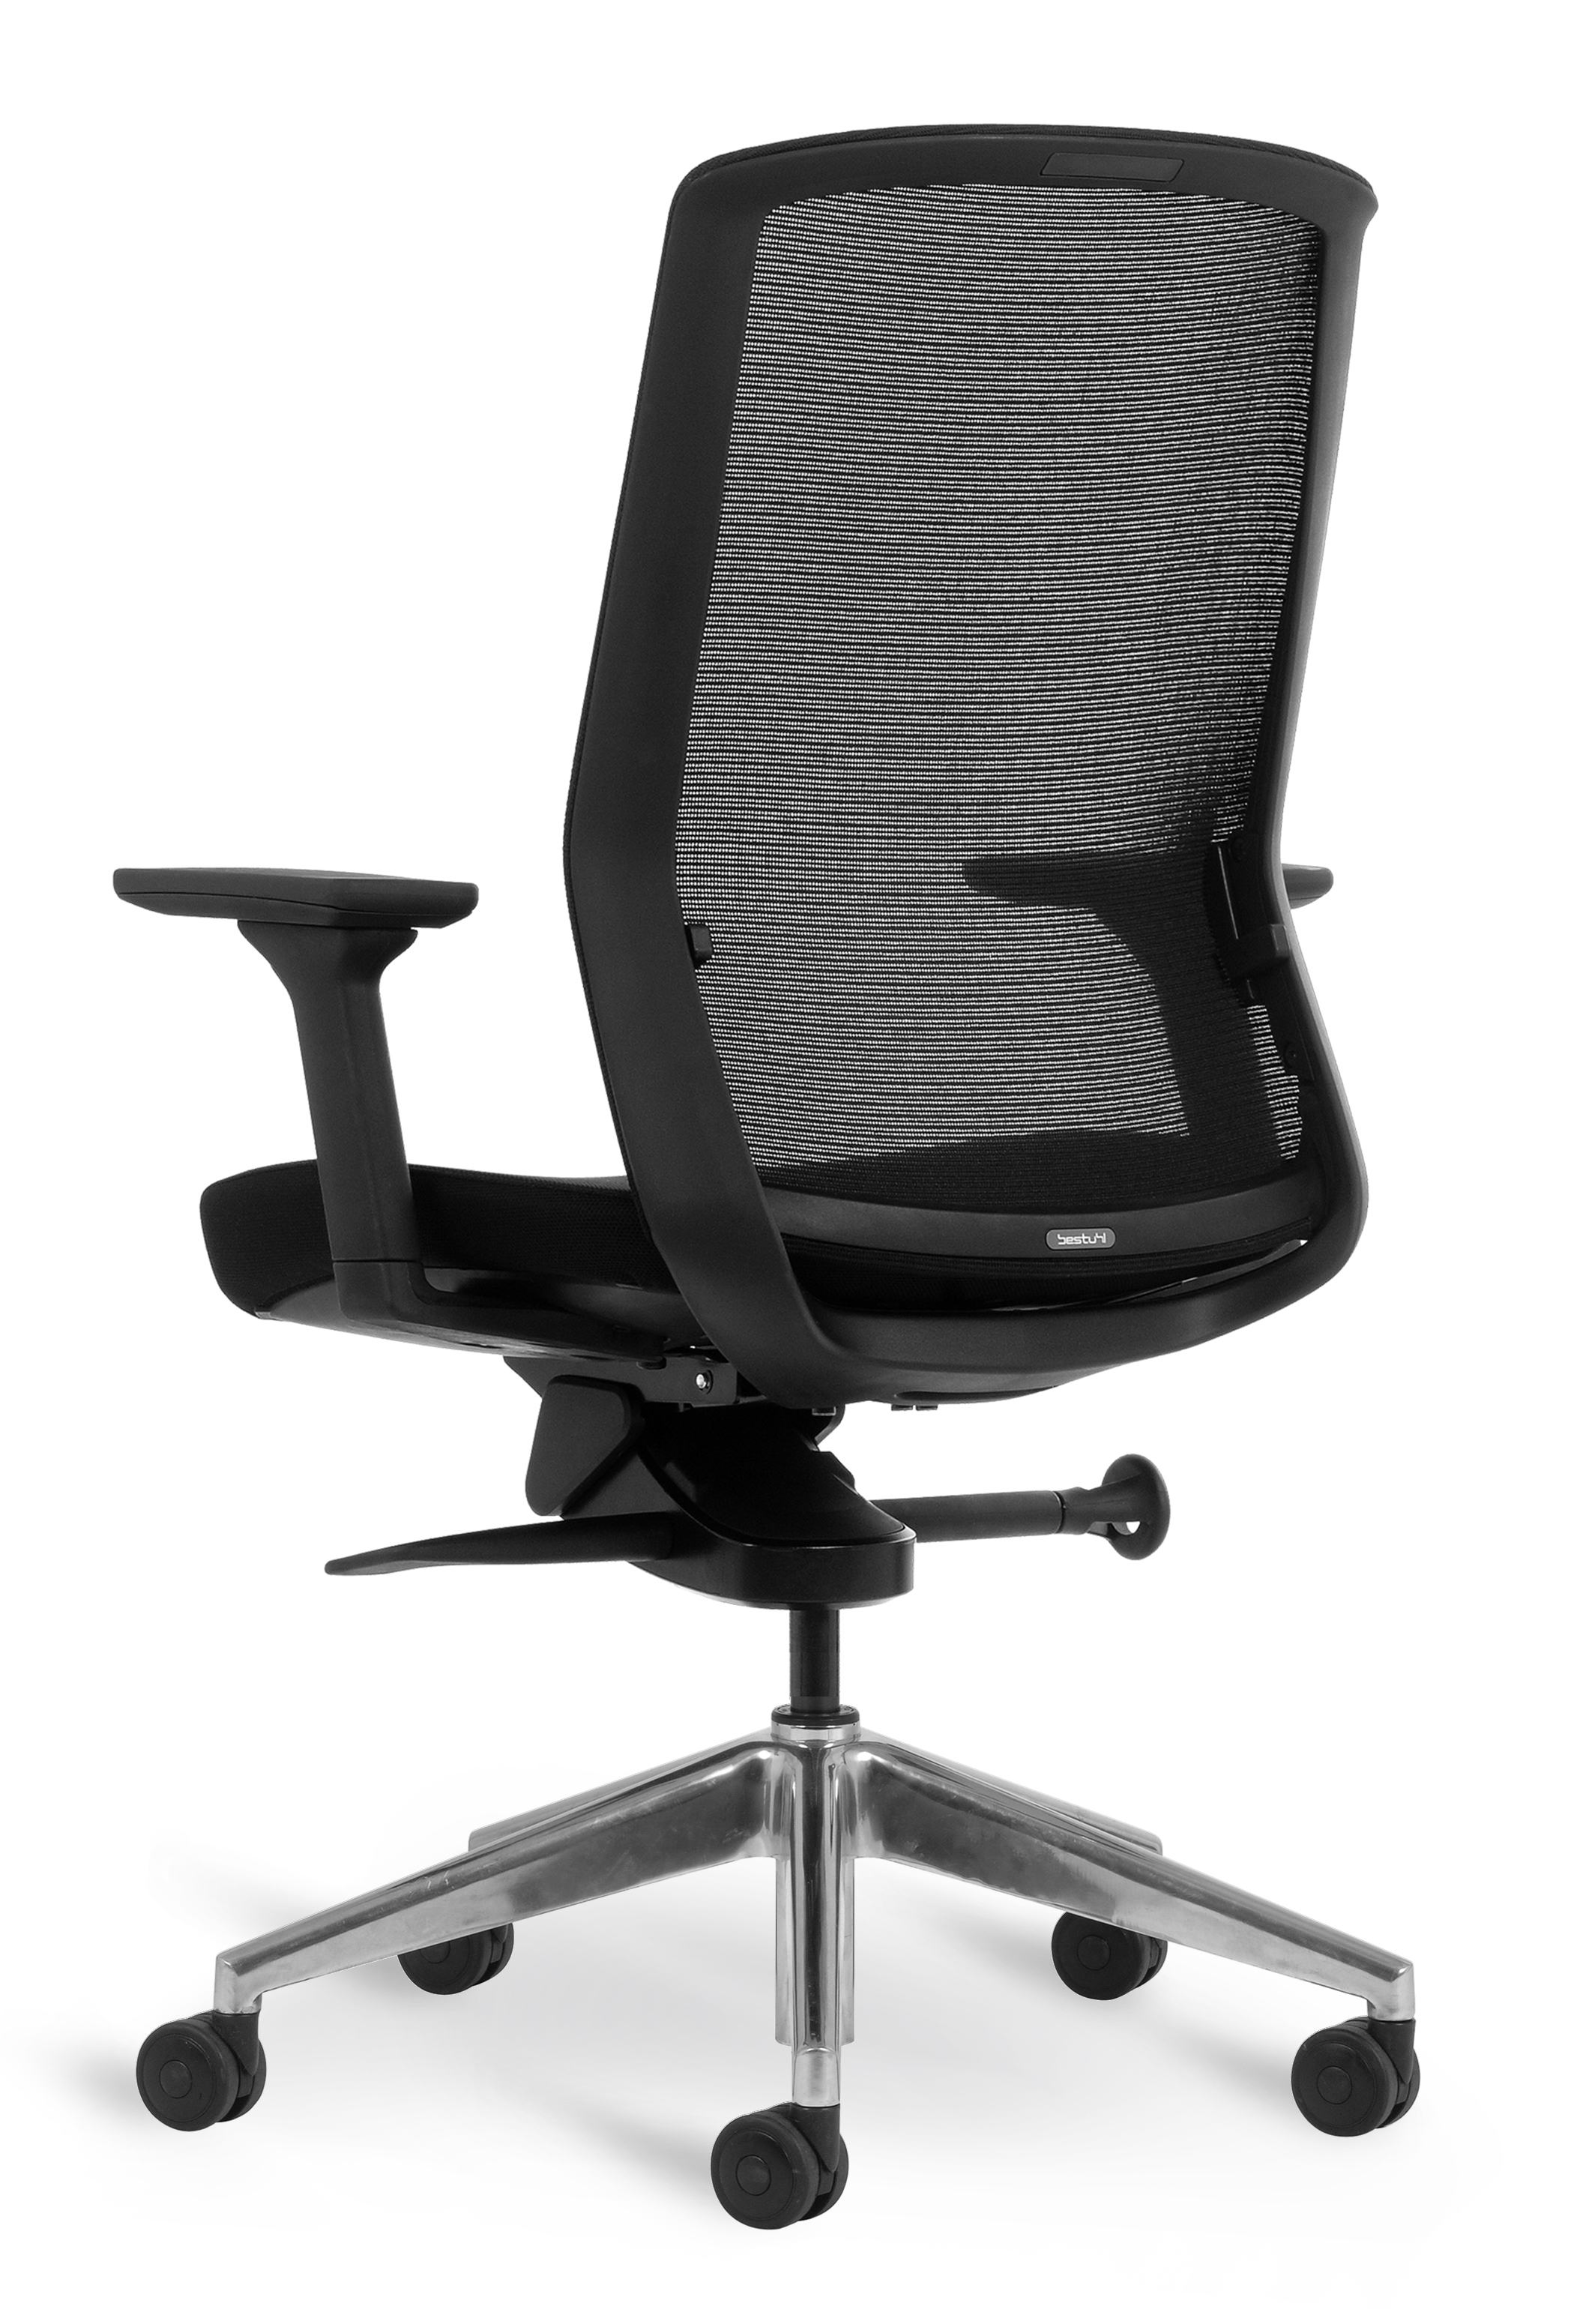 WS - J1 task chair - Black, polished base (Back angle)